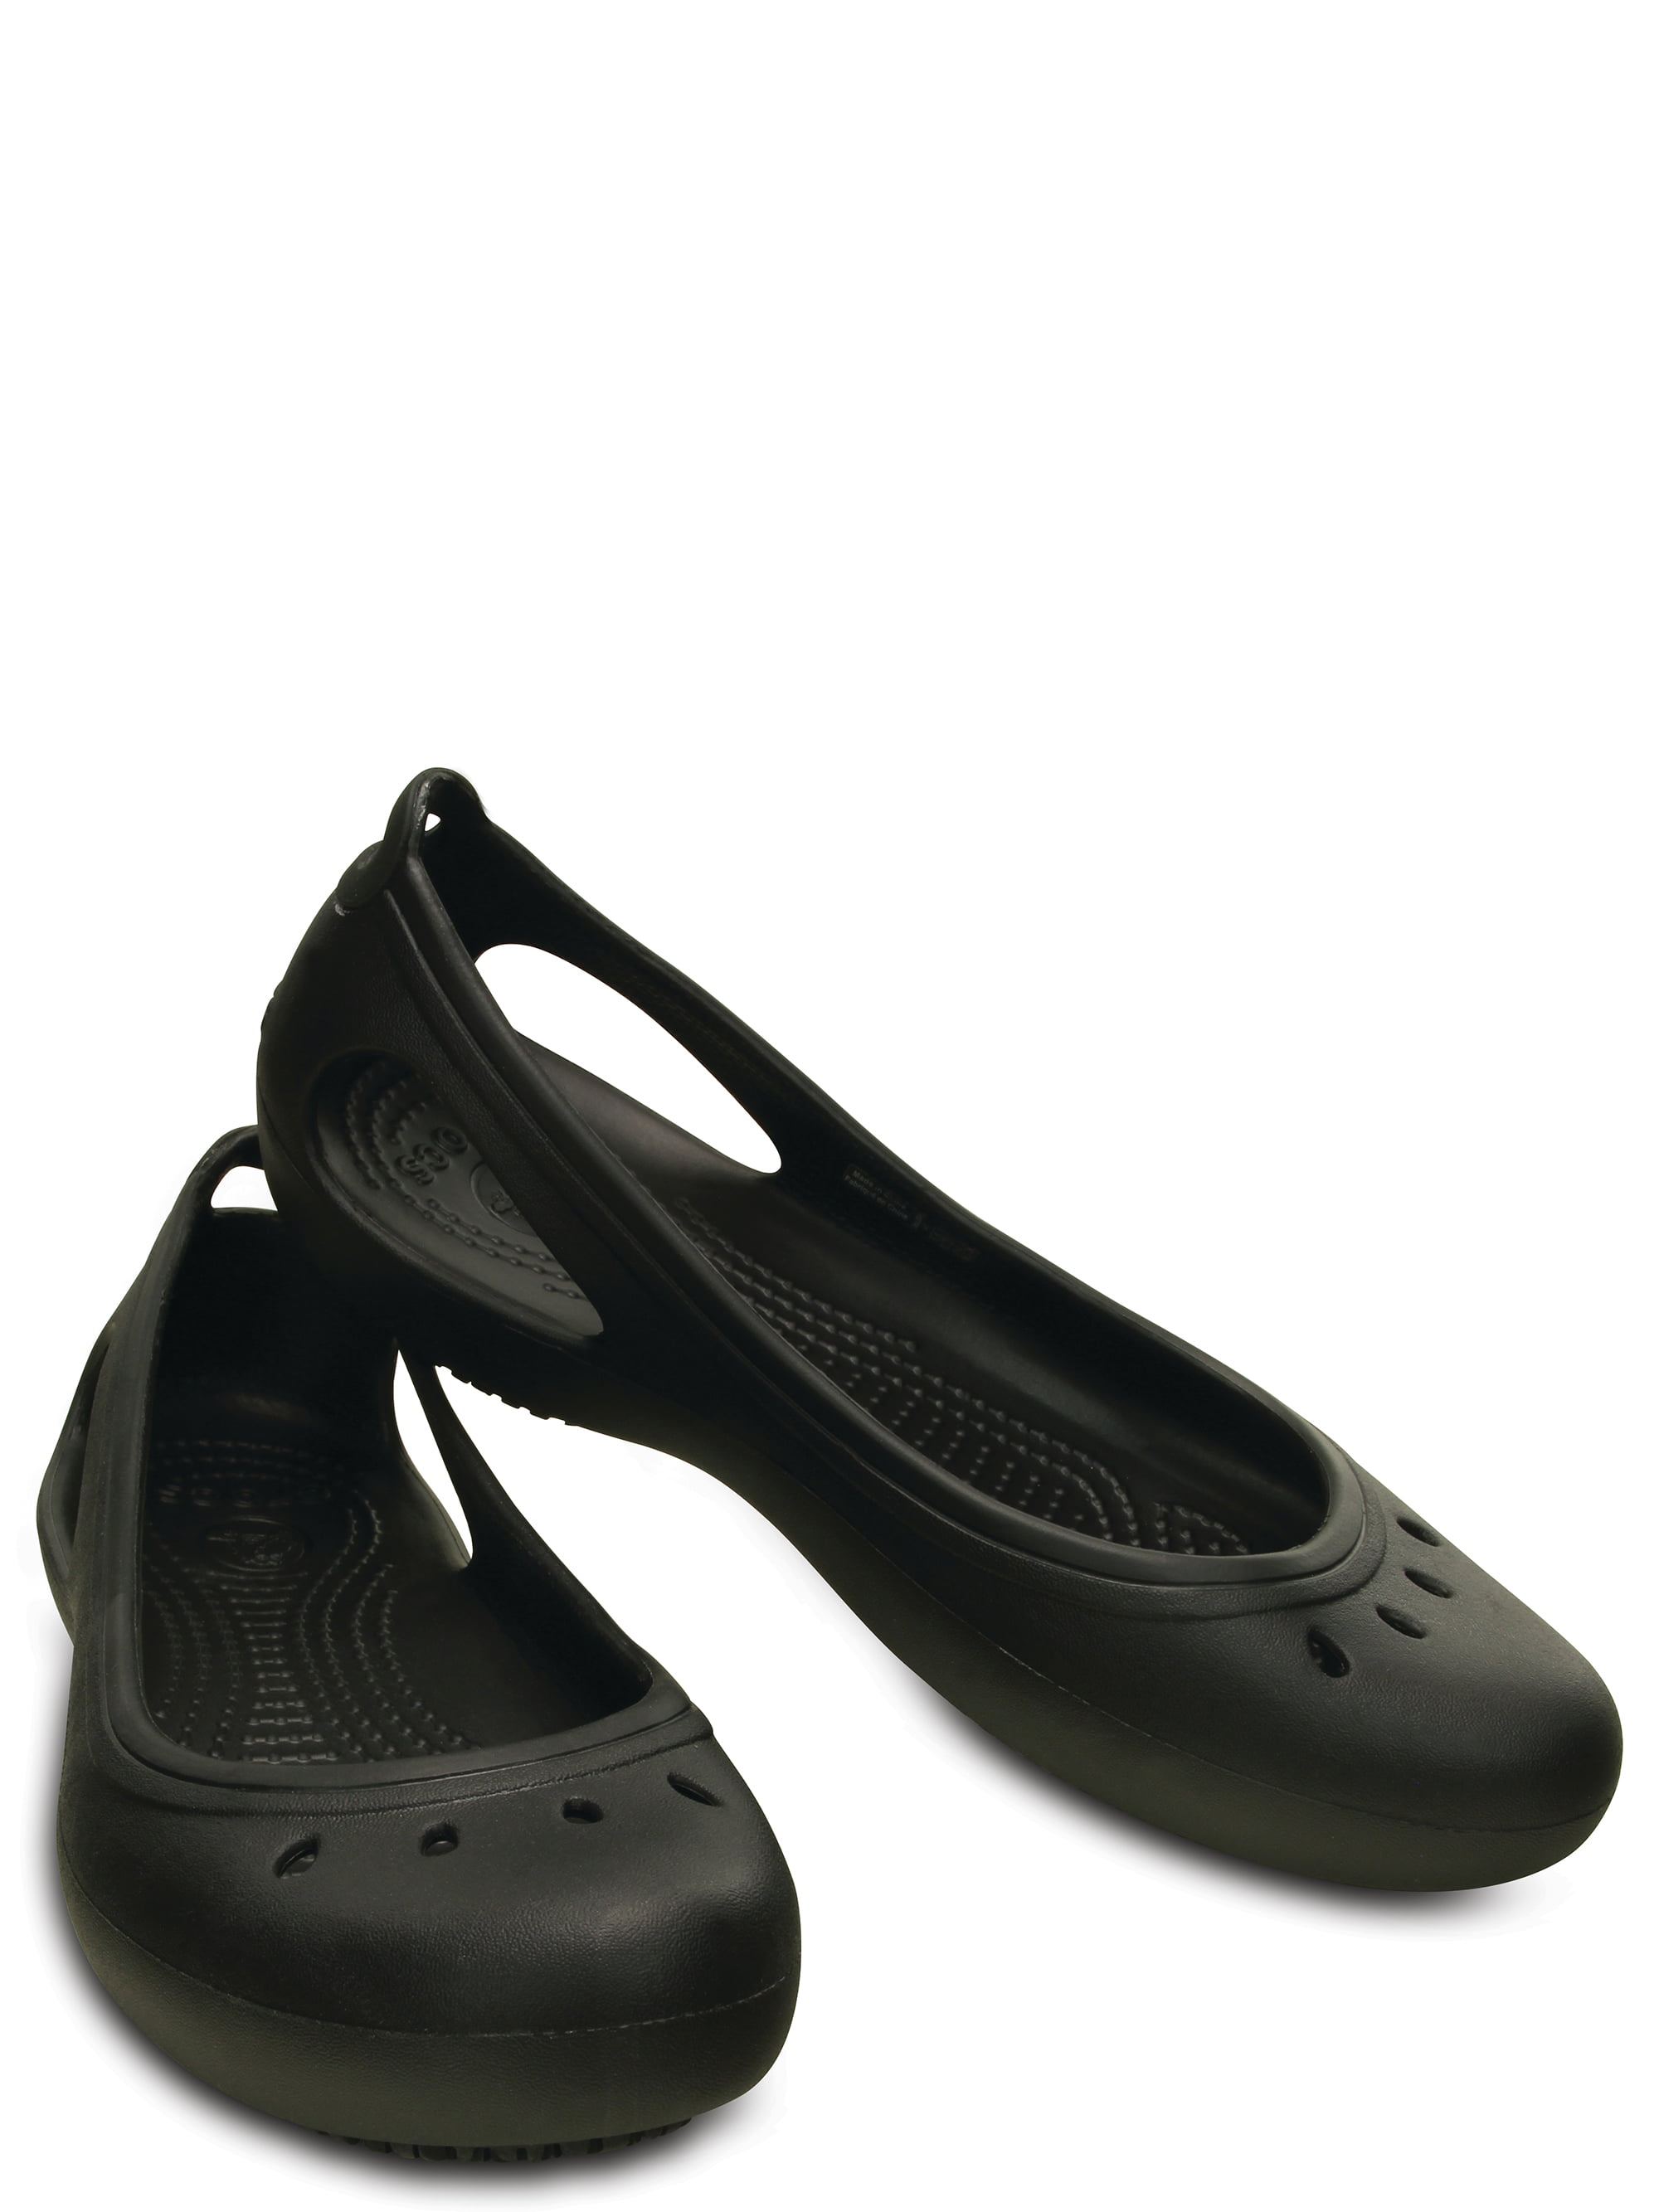 Crocs Women's Kadee Work Shoes 